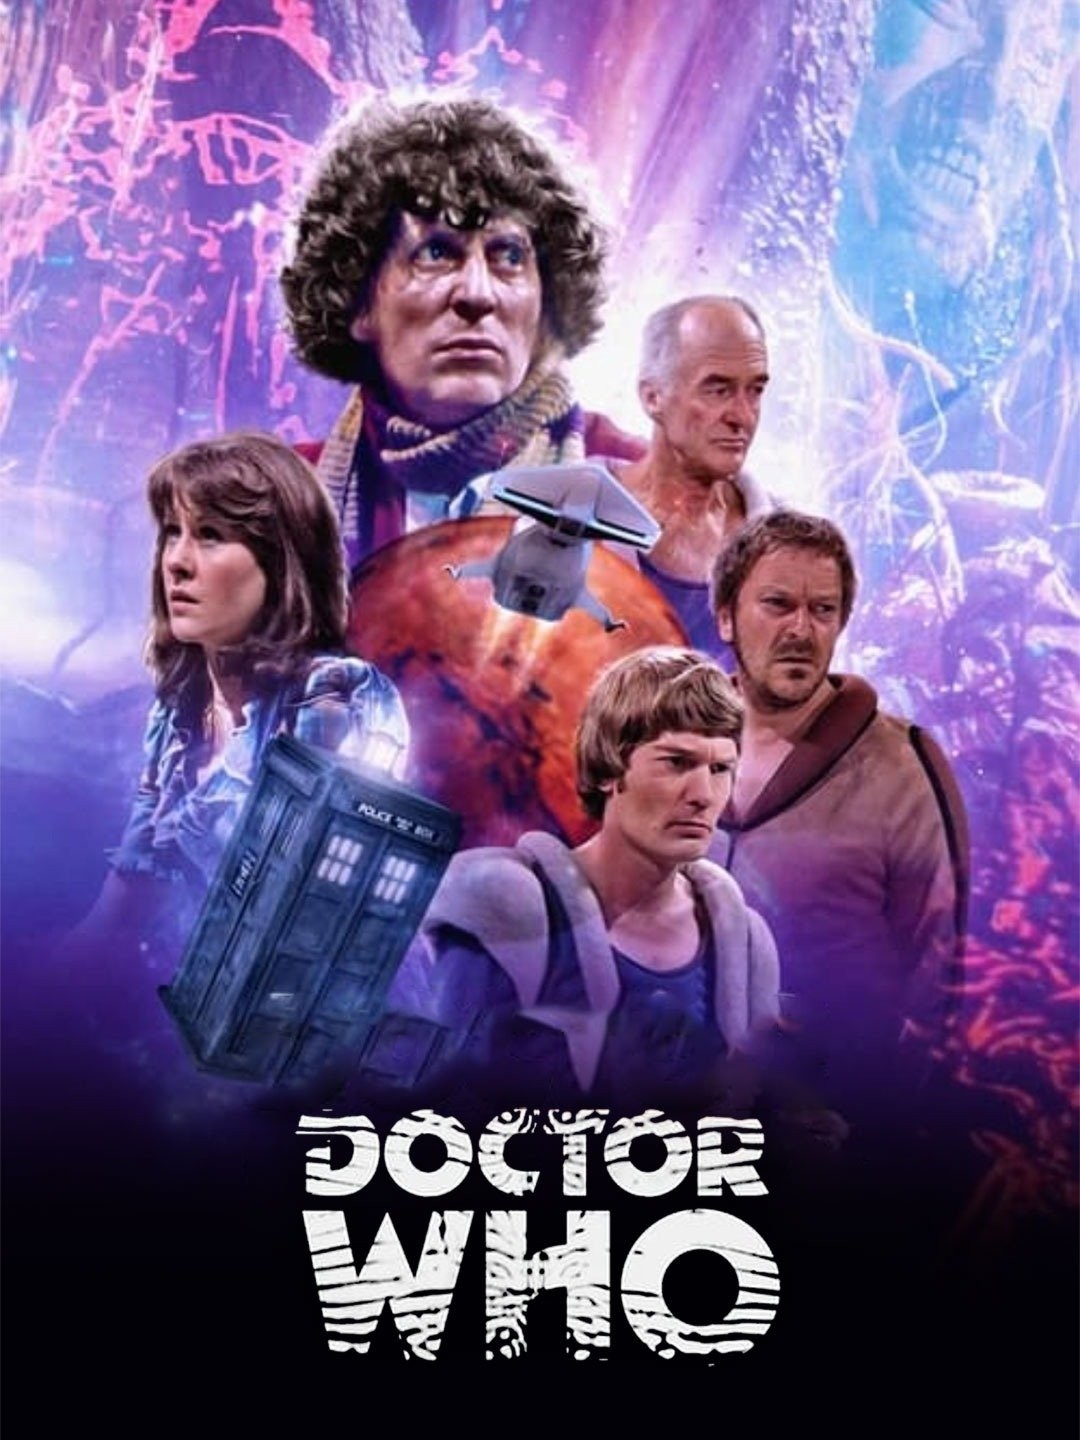 Doctor Who (season 13) - Wikipedia